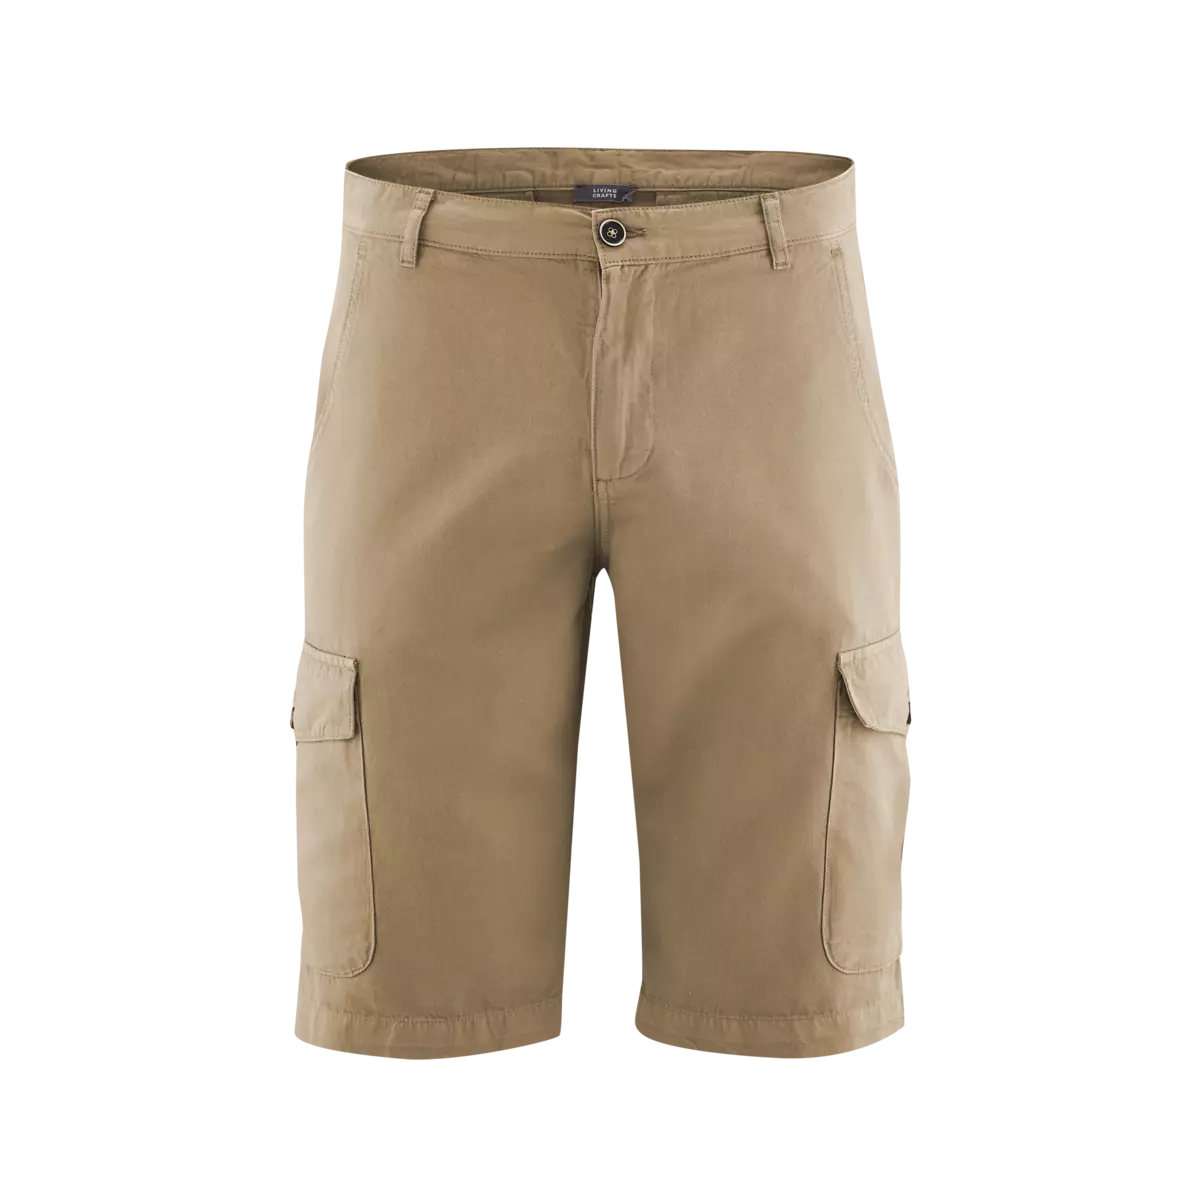 Bermuda shorts CEDRIC Brown